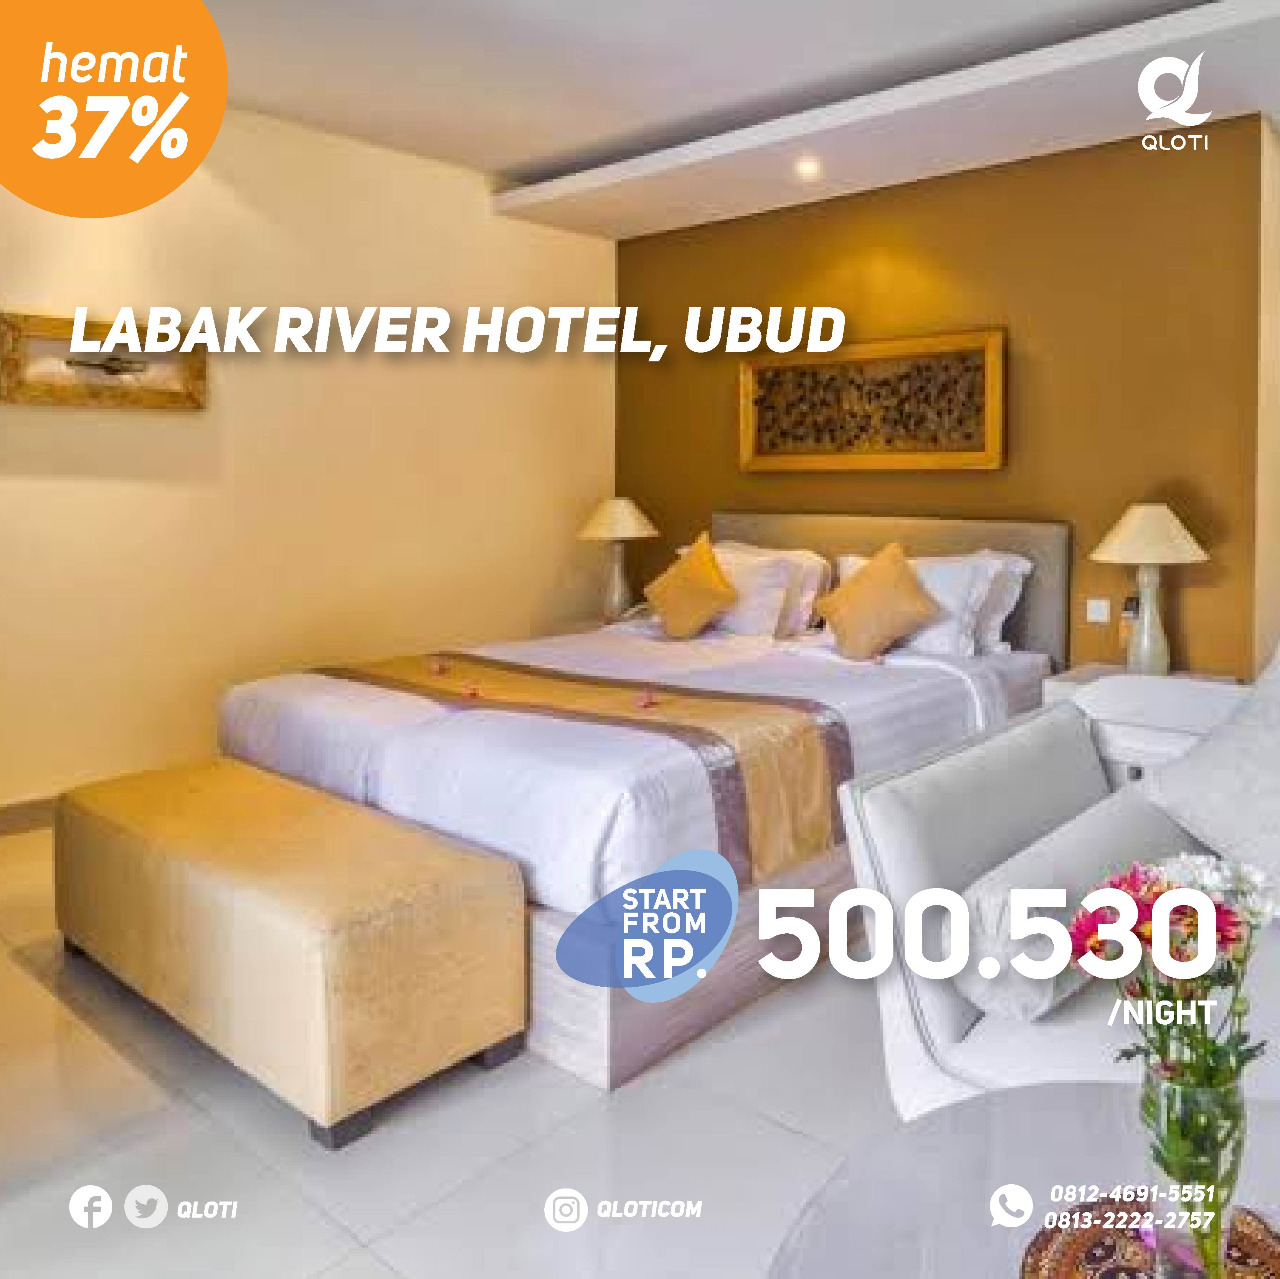 labak river hotel - yoexplore, liburan keluarga - yoexplore.co.id